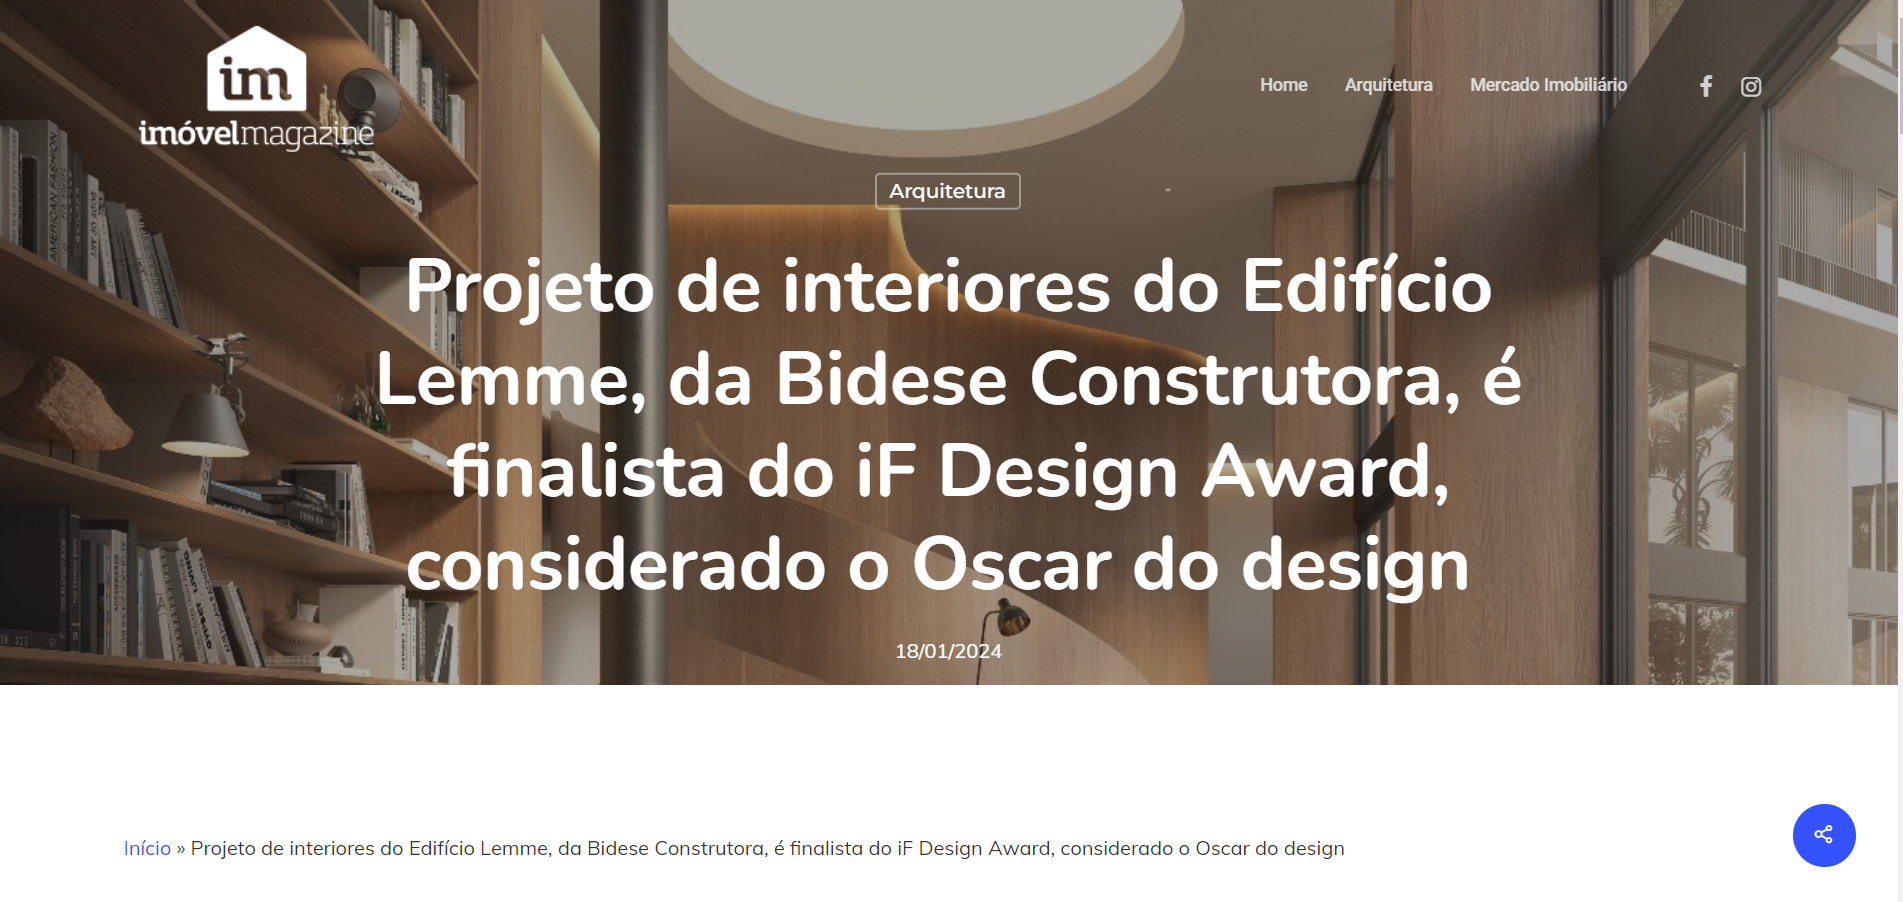 Imóvel Magazine - Projeto de interiores do Edifício Lemme, da Bidese Construtora, é finalista do iF Design Award, considerado o Oscar do design